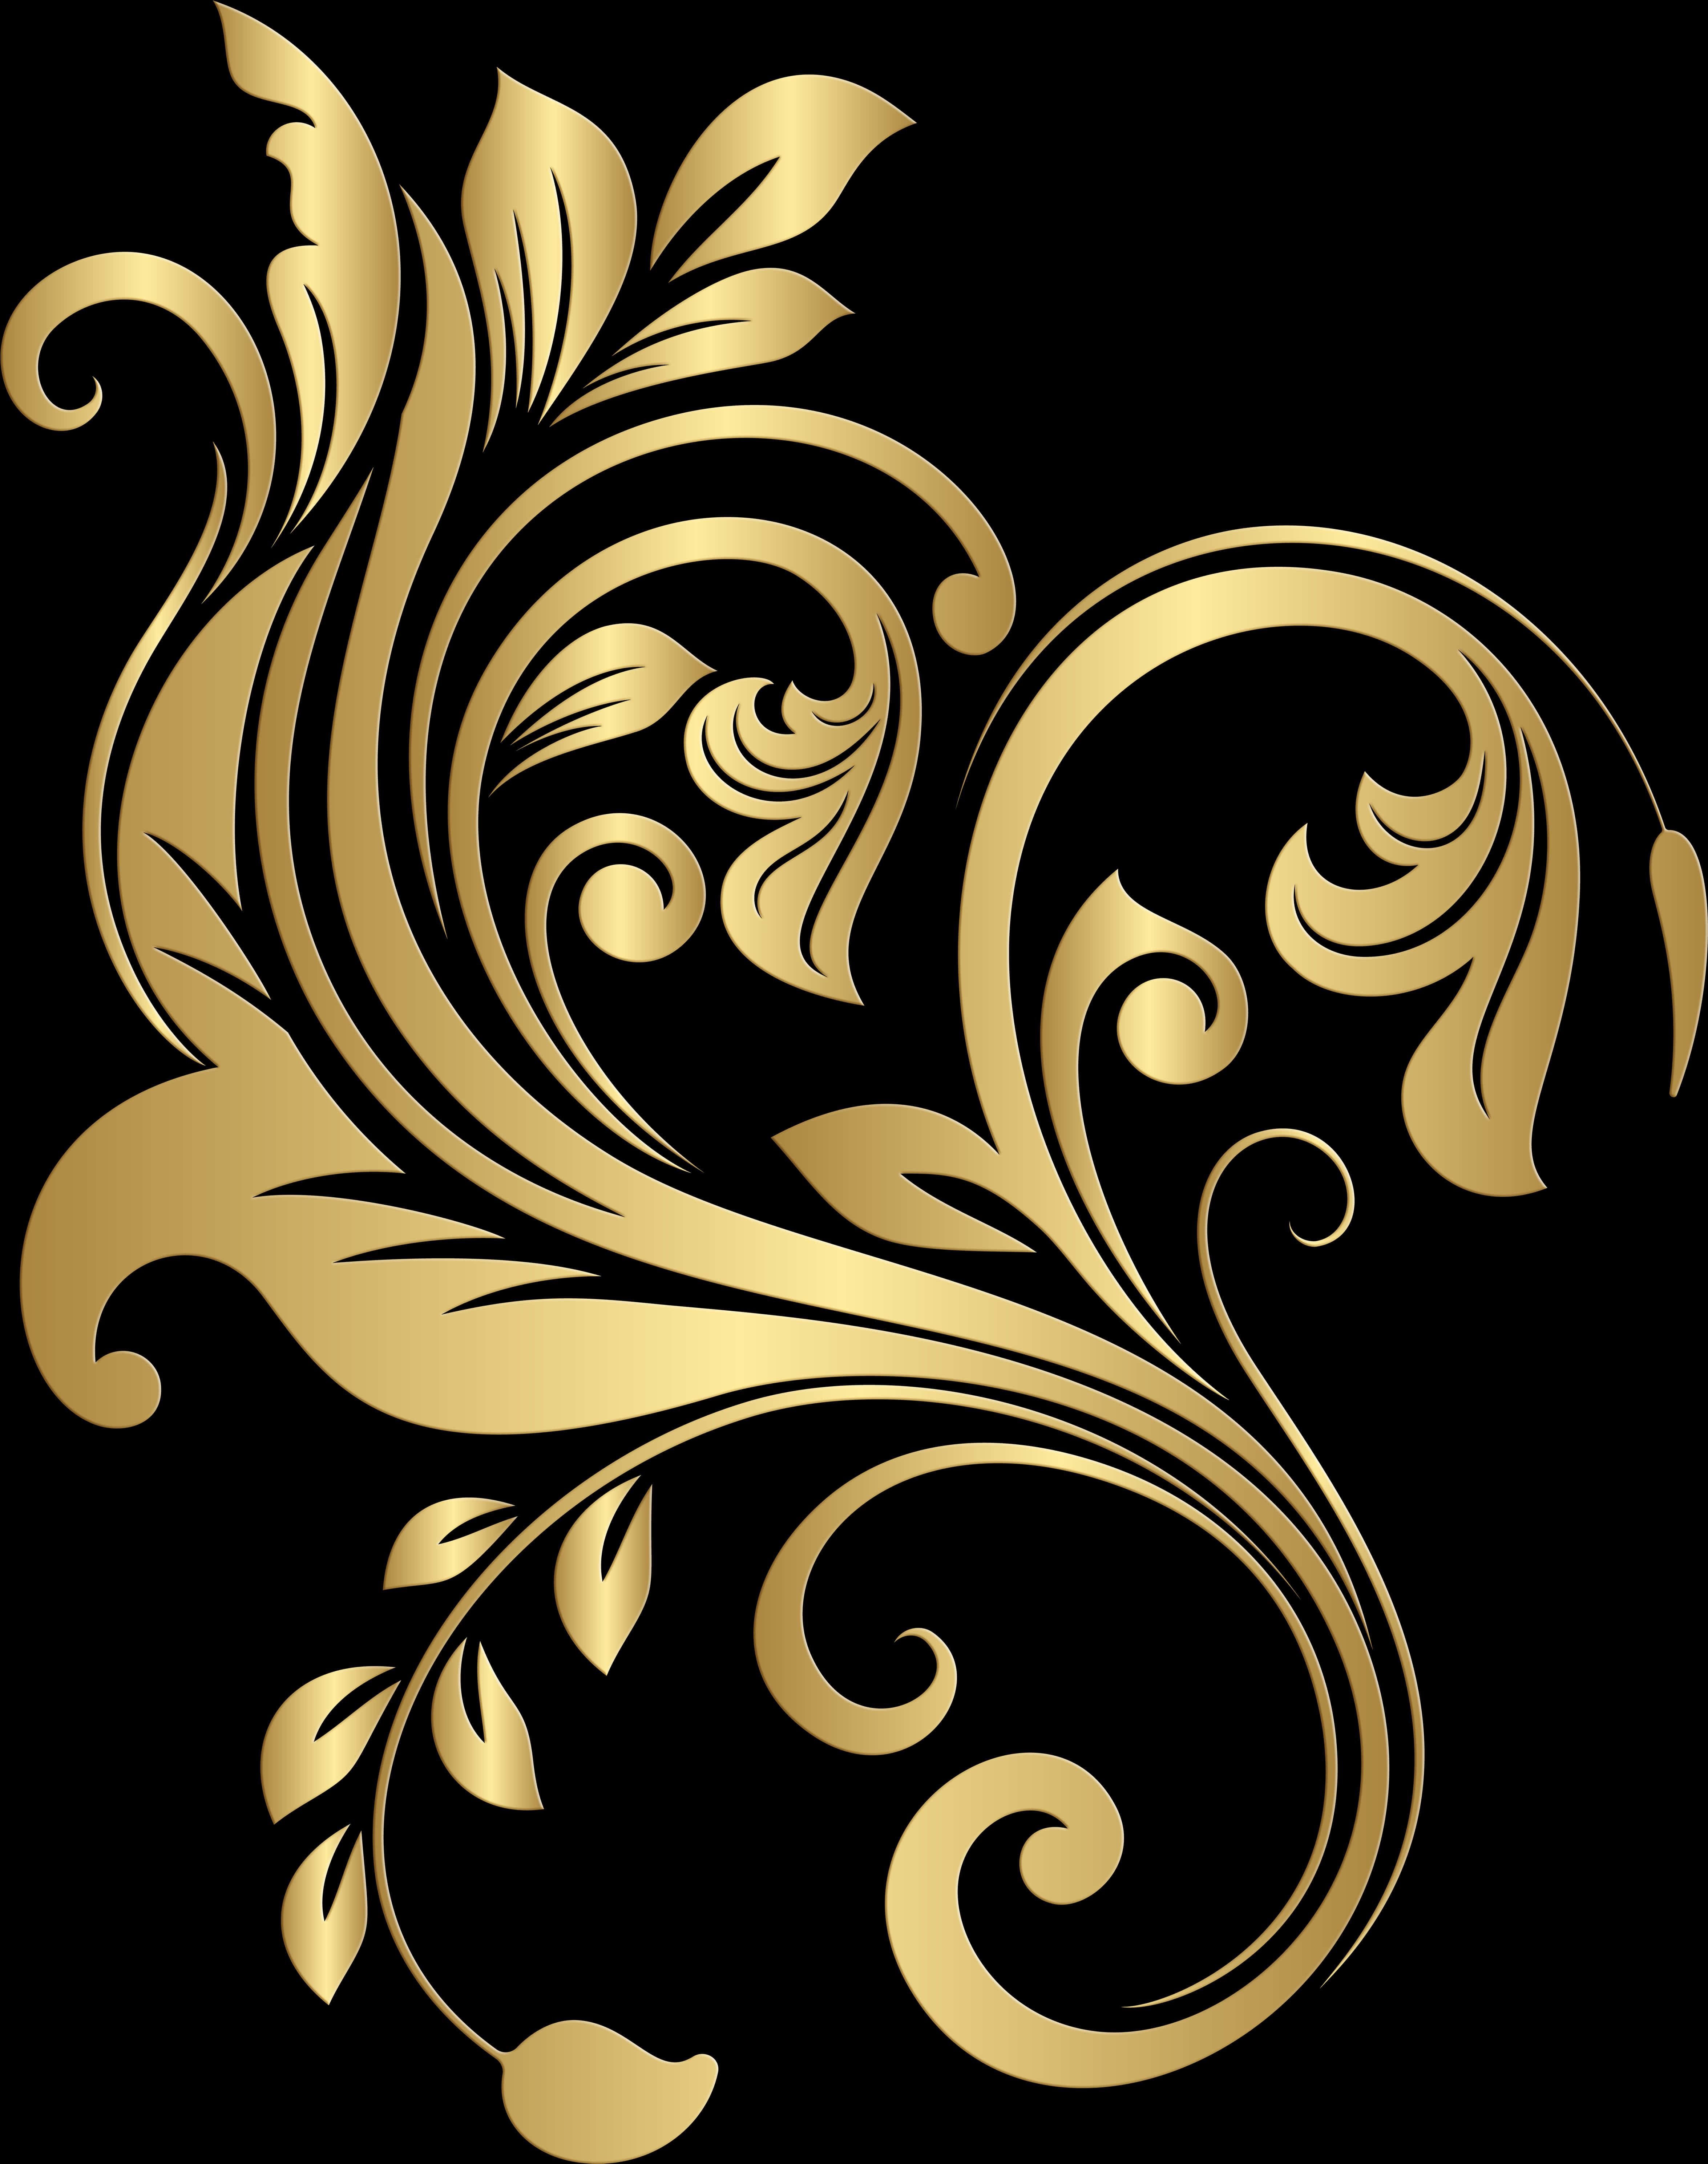 Golden Floral Decorative Element PNG image